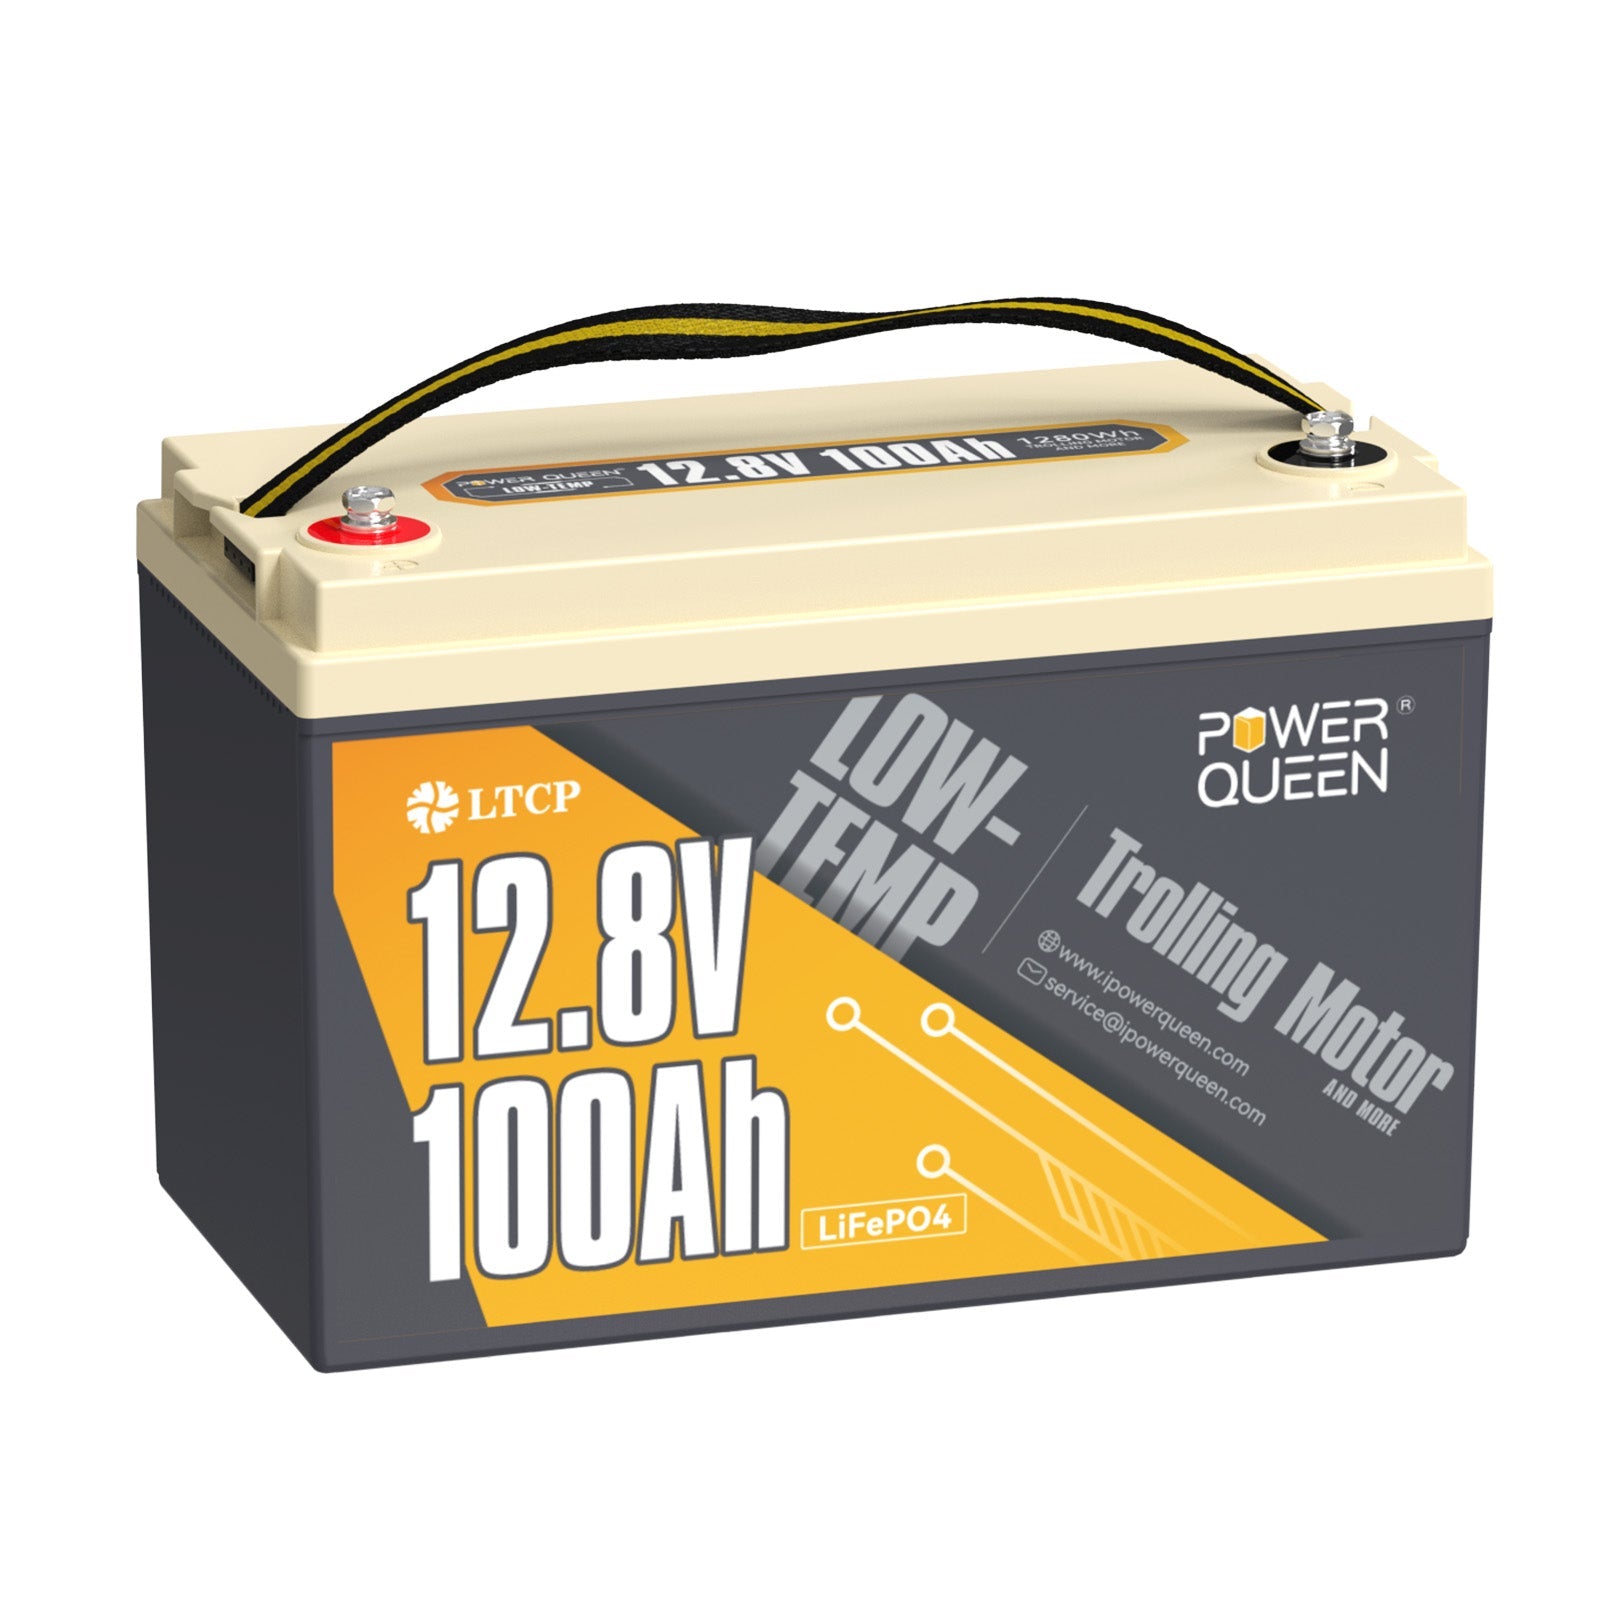 【0% IVA】Batteria Power Queen 12,8 V 100 Ah LiFePO4 a bassa temperatura, 100 A BMS per motore da pesca alla traina